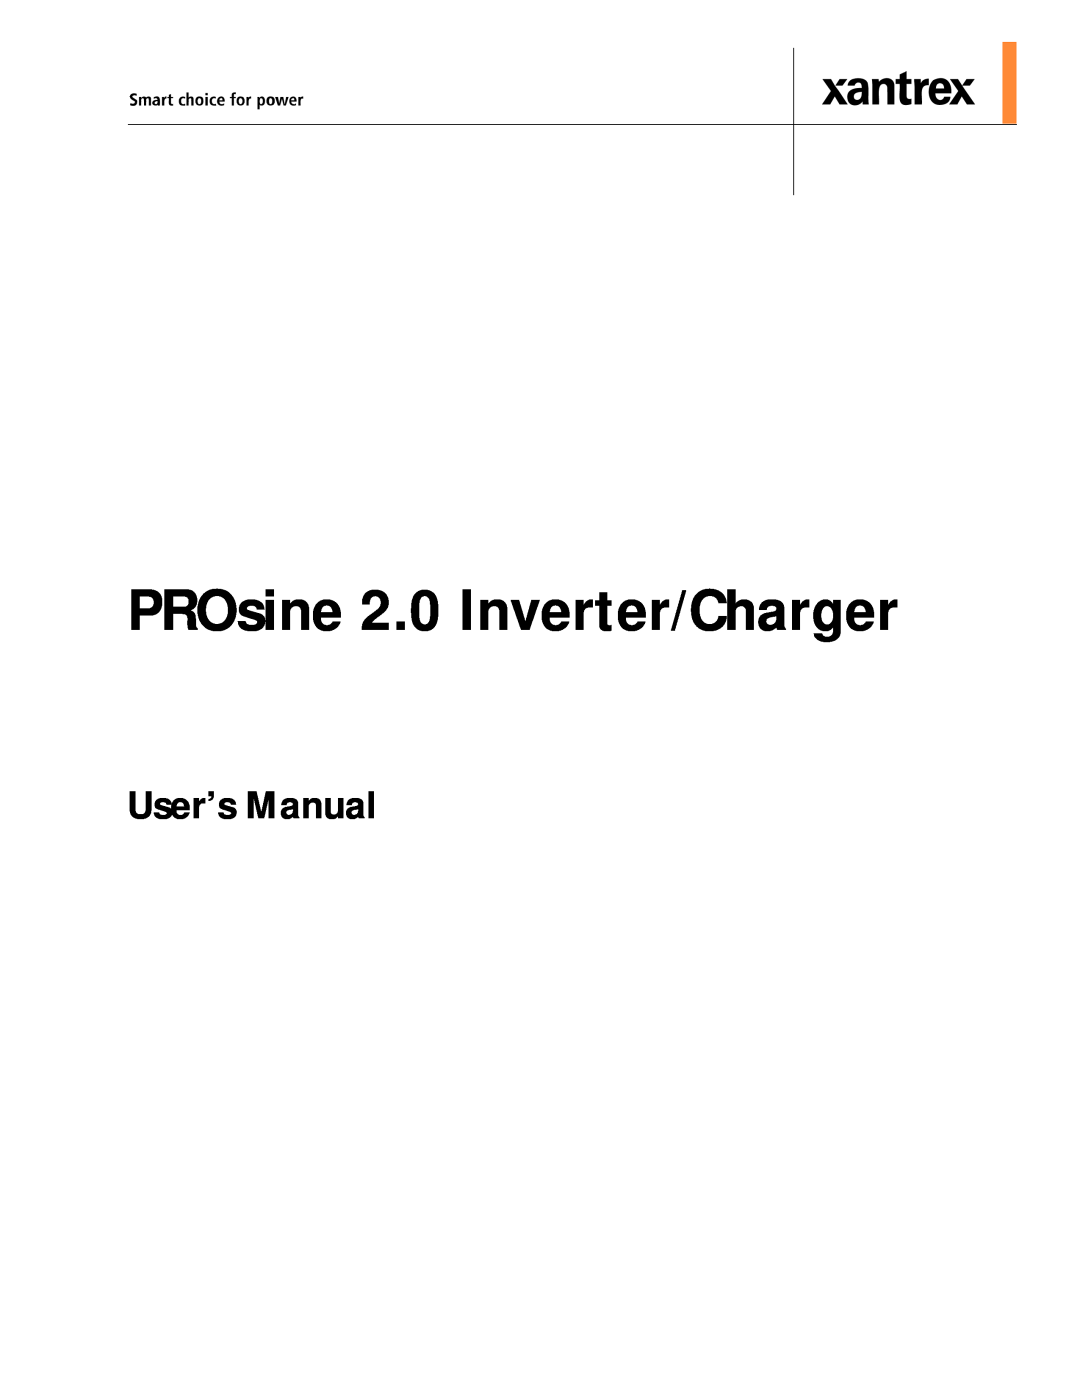 Xantrex Technology user manual User’s Manual, PROsine 2.0 Inverter/Charger 